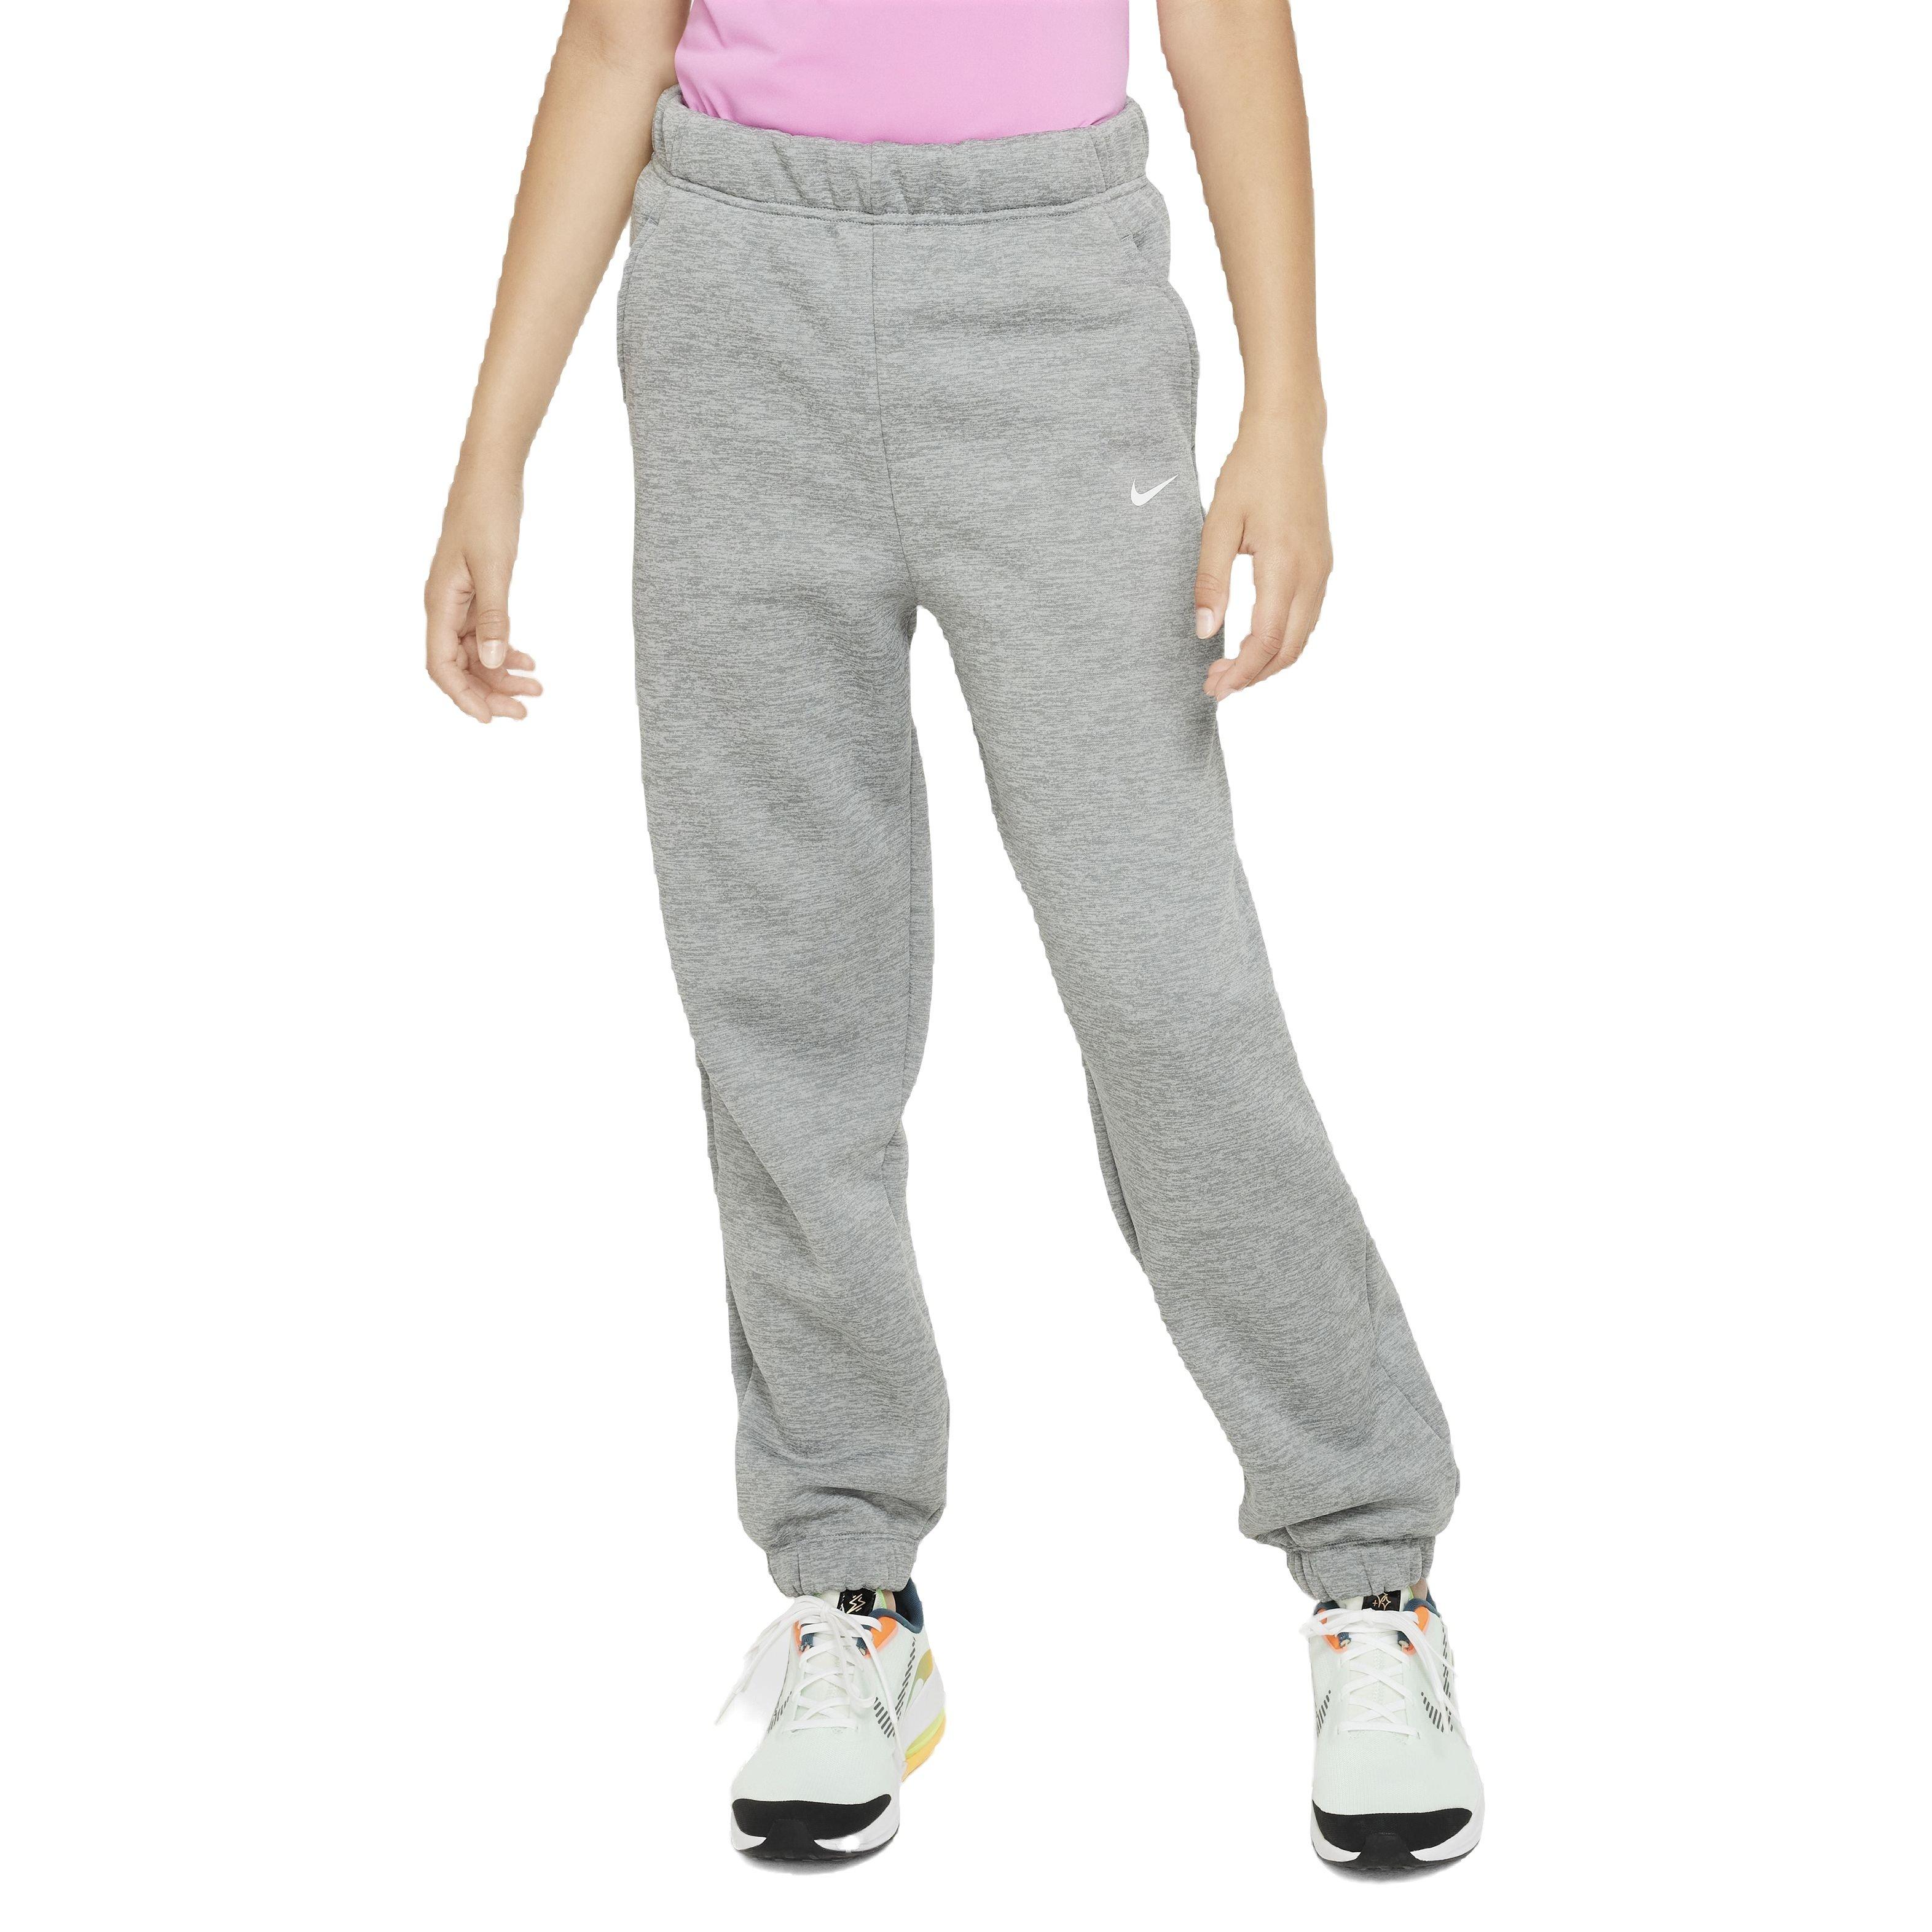 Nike Girls' Therma-FIT Cuff Sweatpants, Kids', Cuffed, Thermal